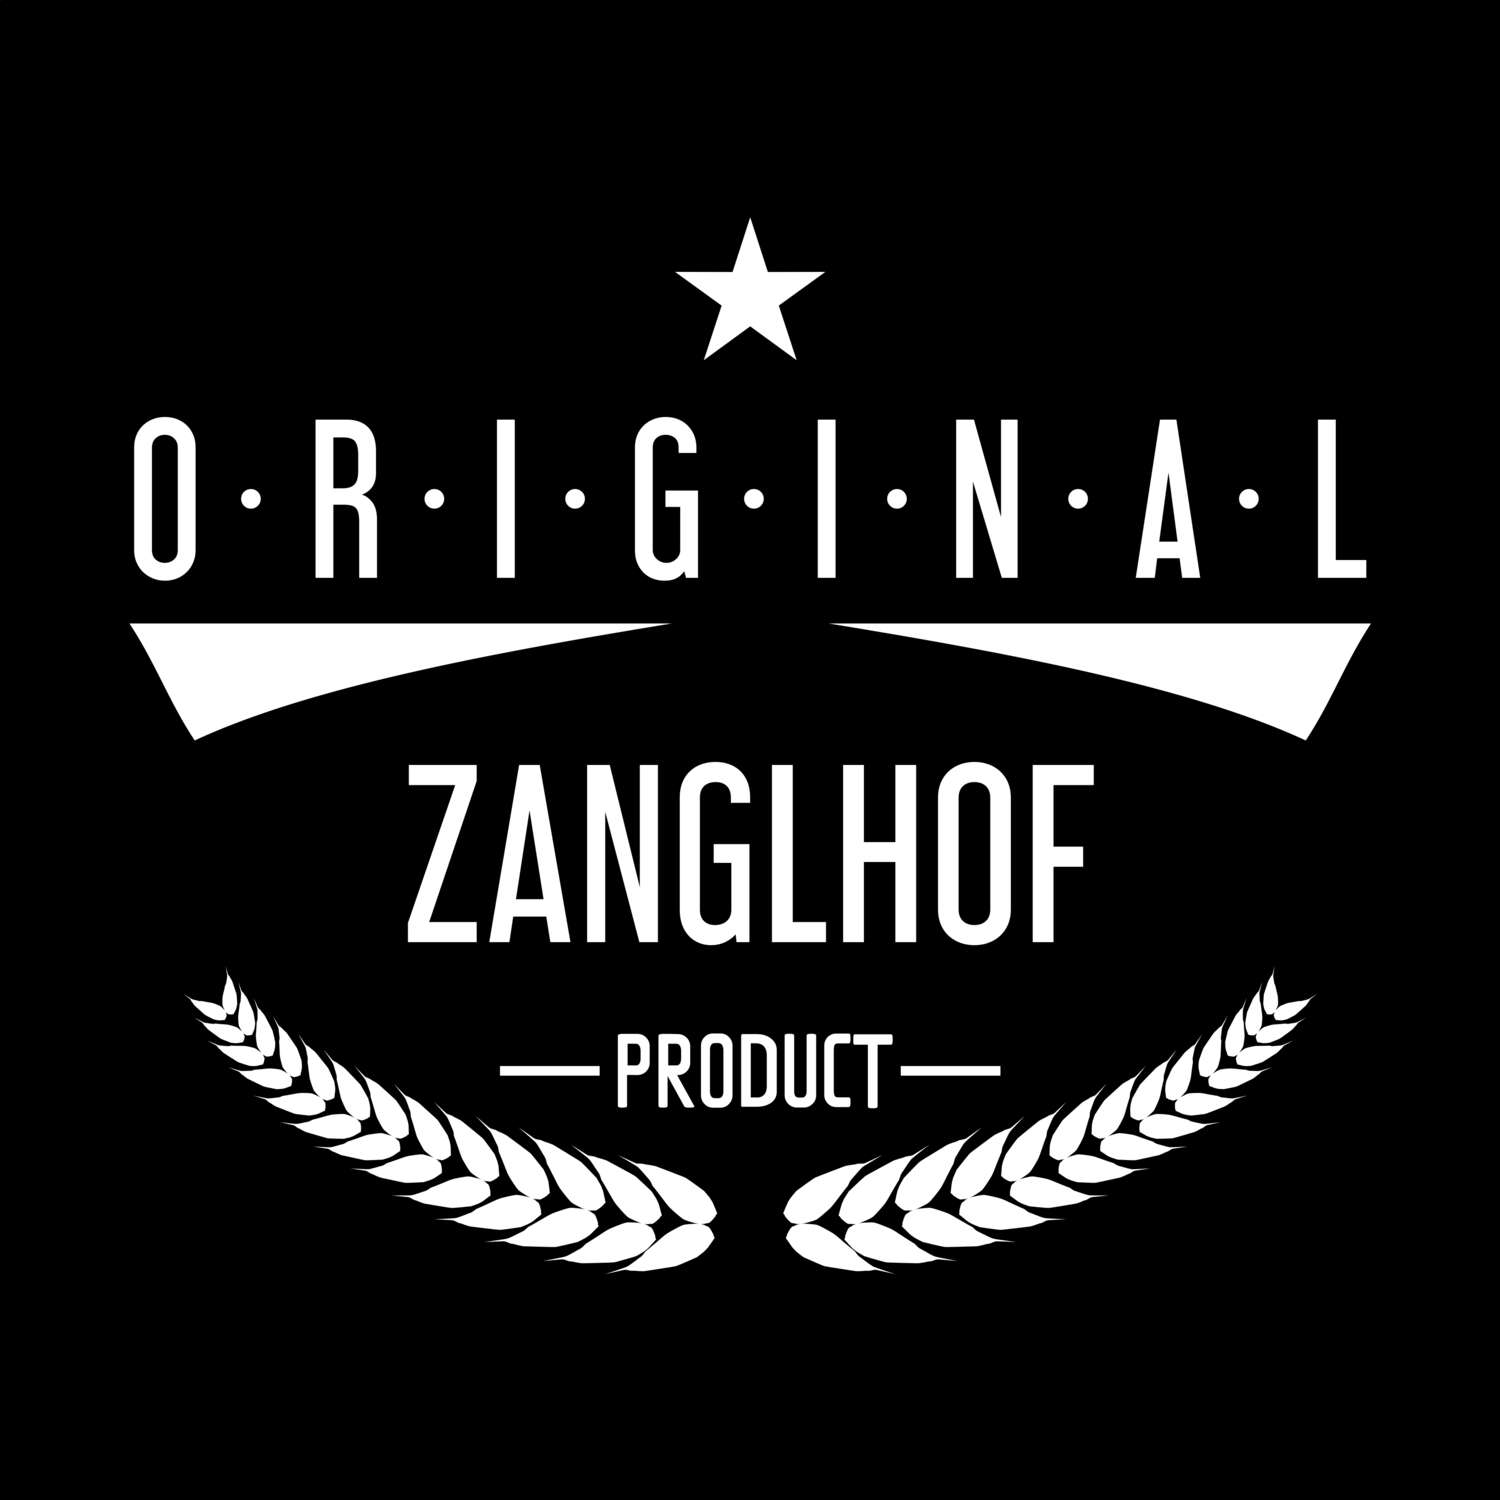 Zanglhof T-Shirt »Original Product«